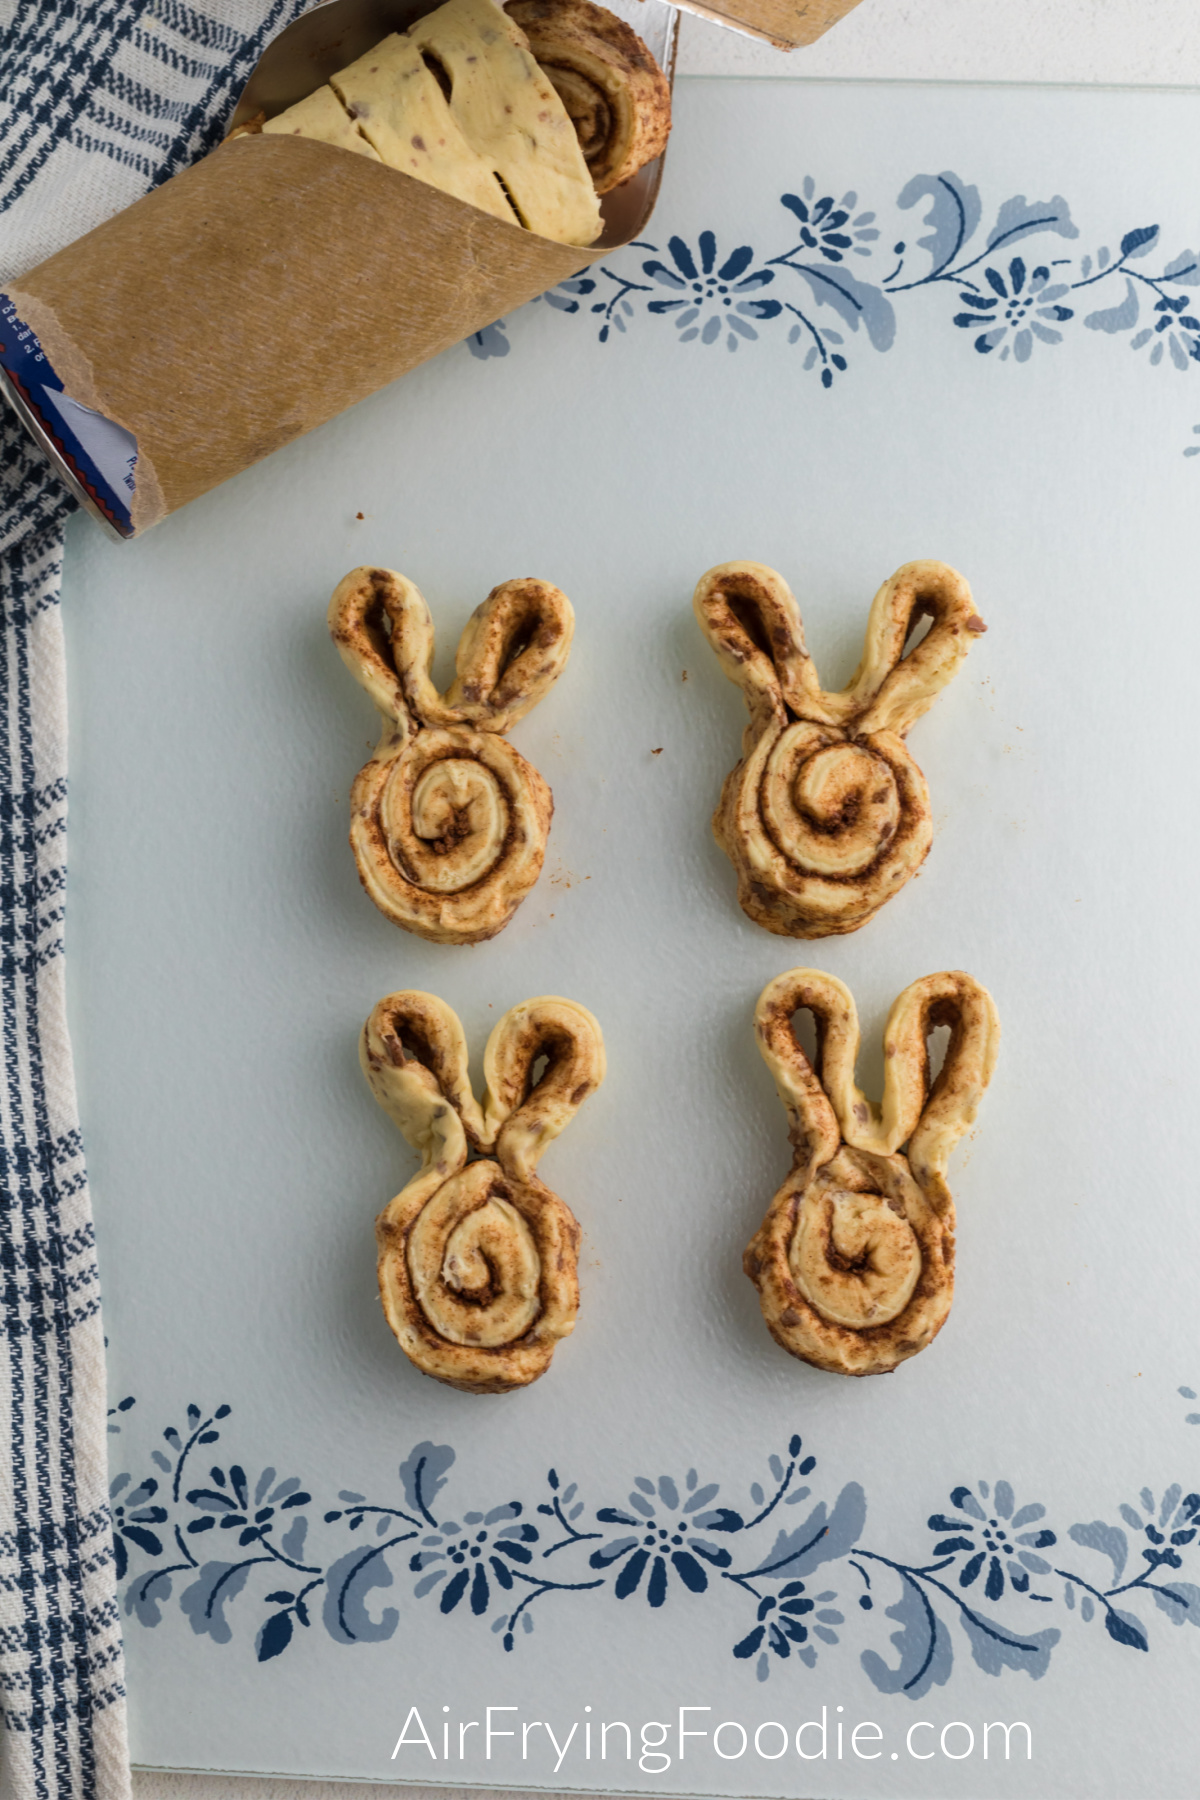 Cinnamon roll dough rolled into bunnies.